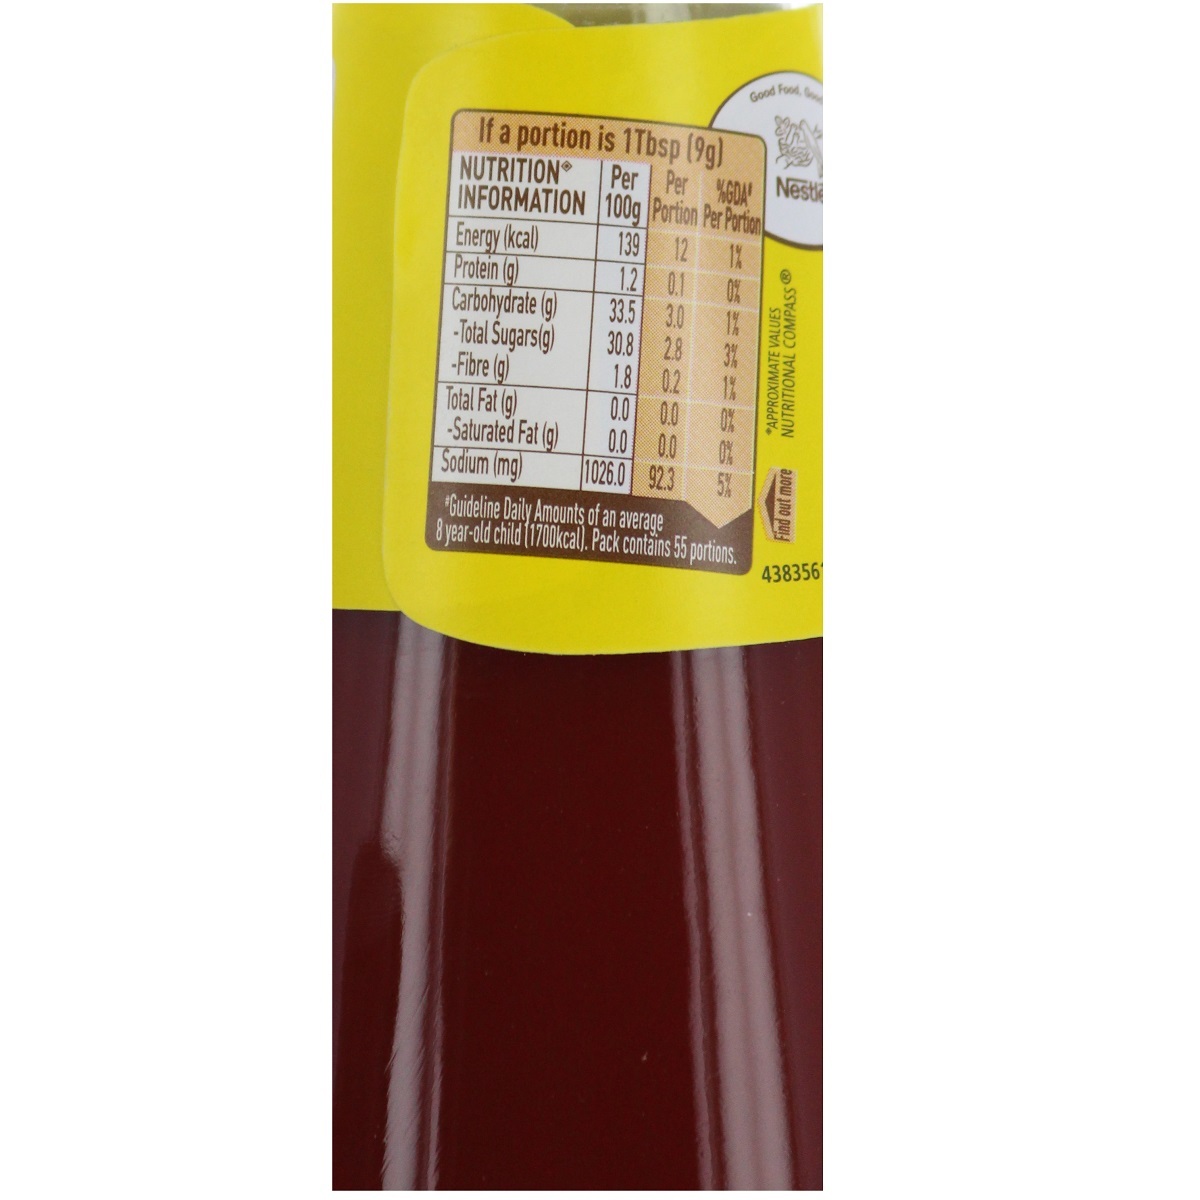 Maggi Tomato Ketchup Bottle 500g